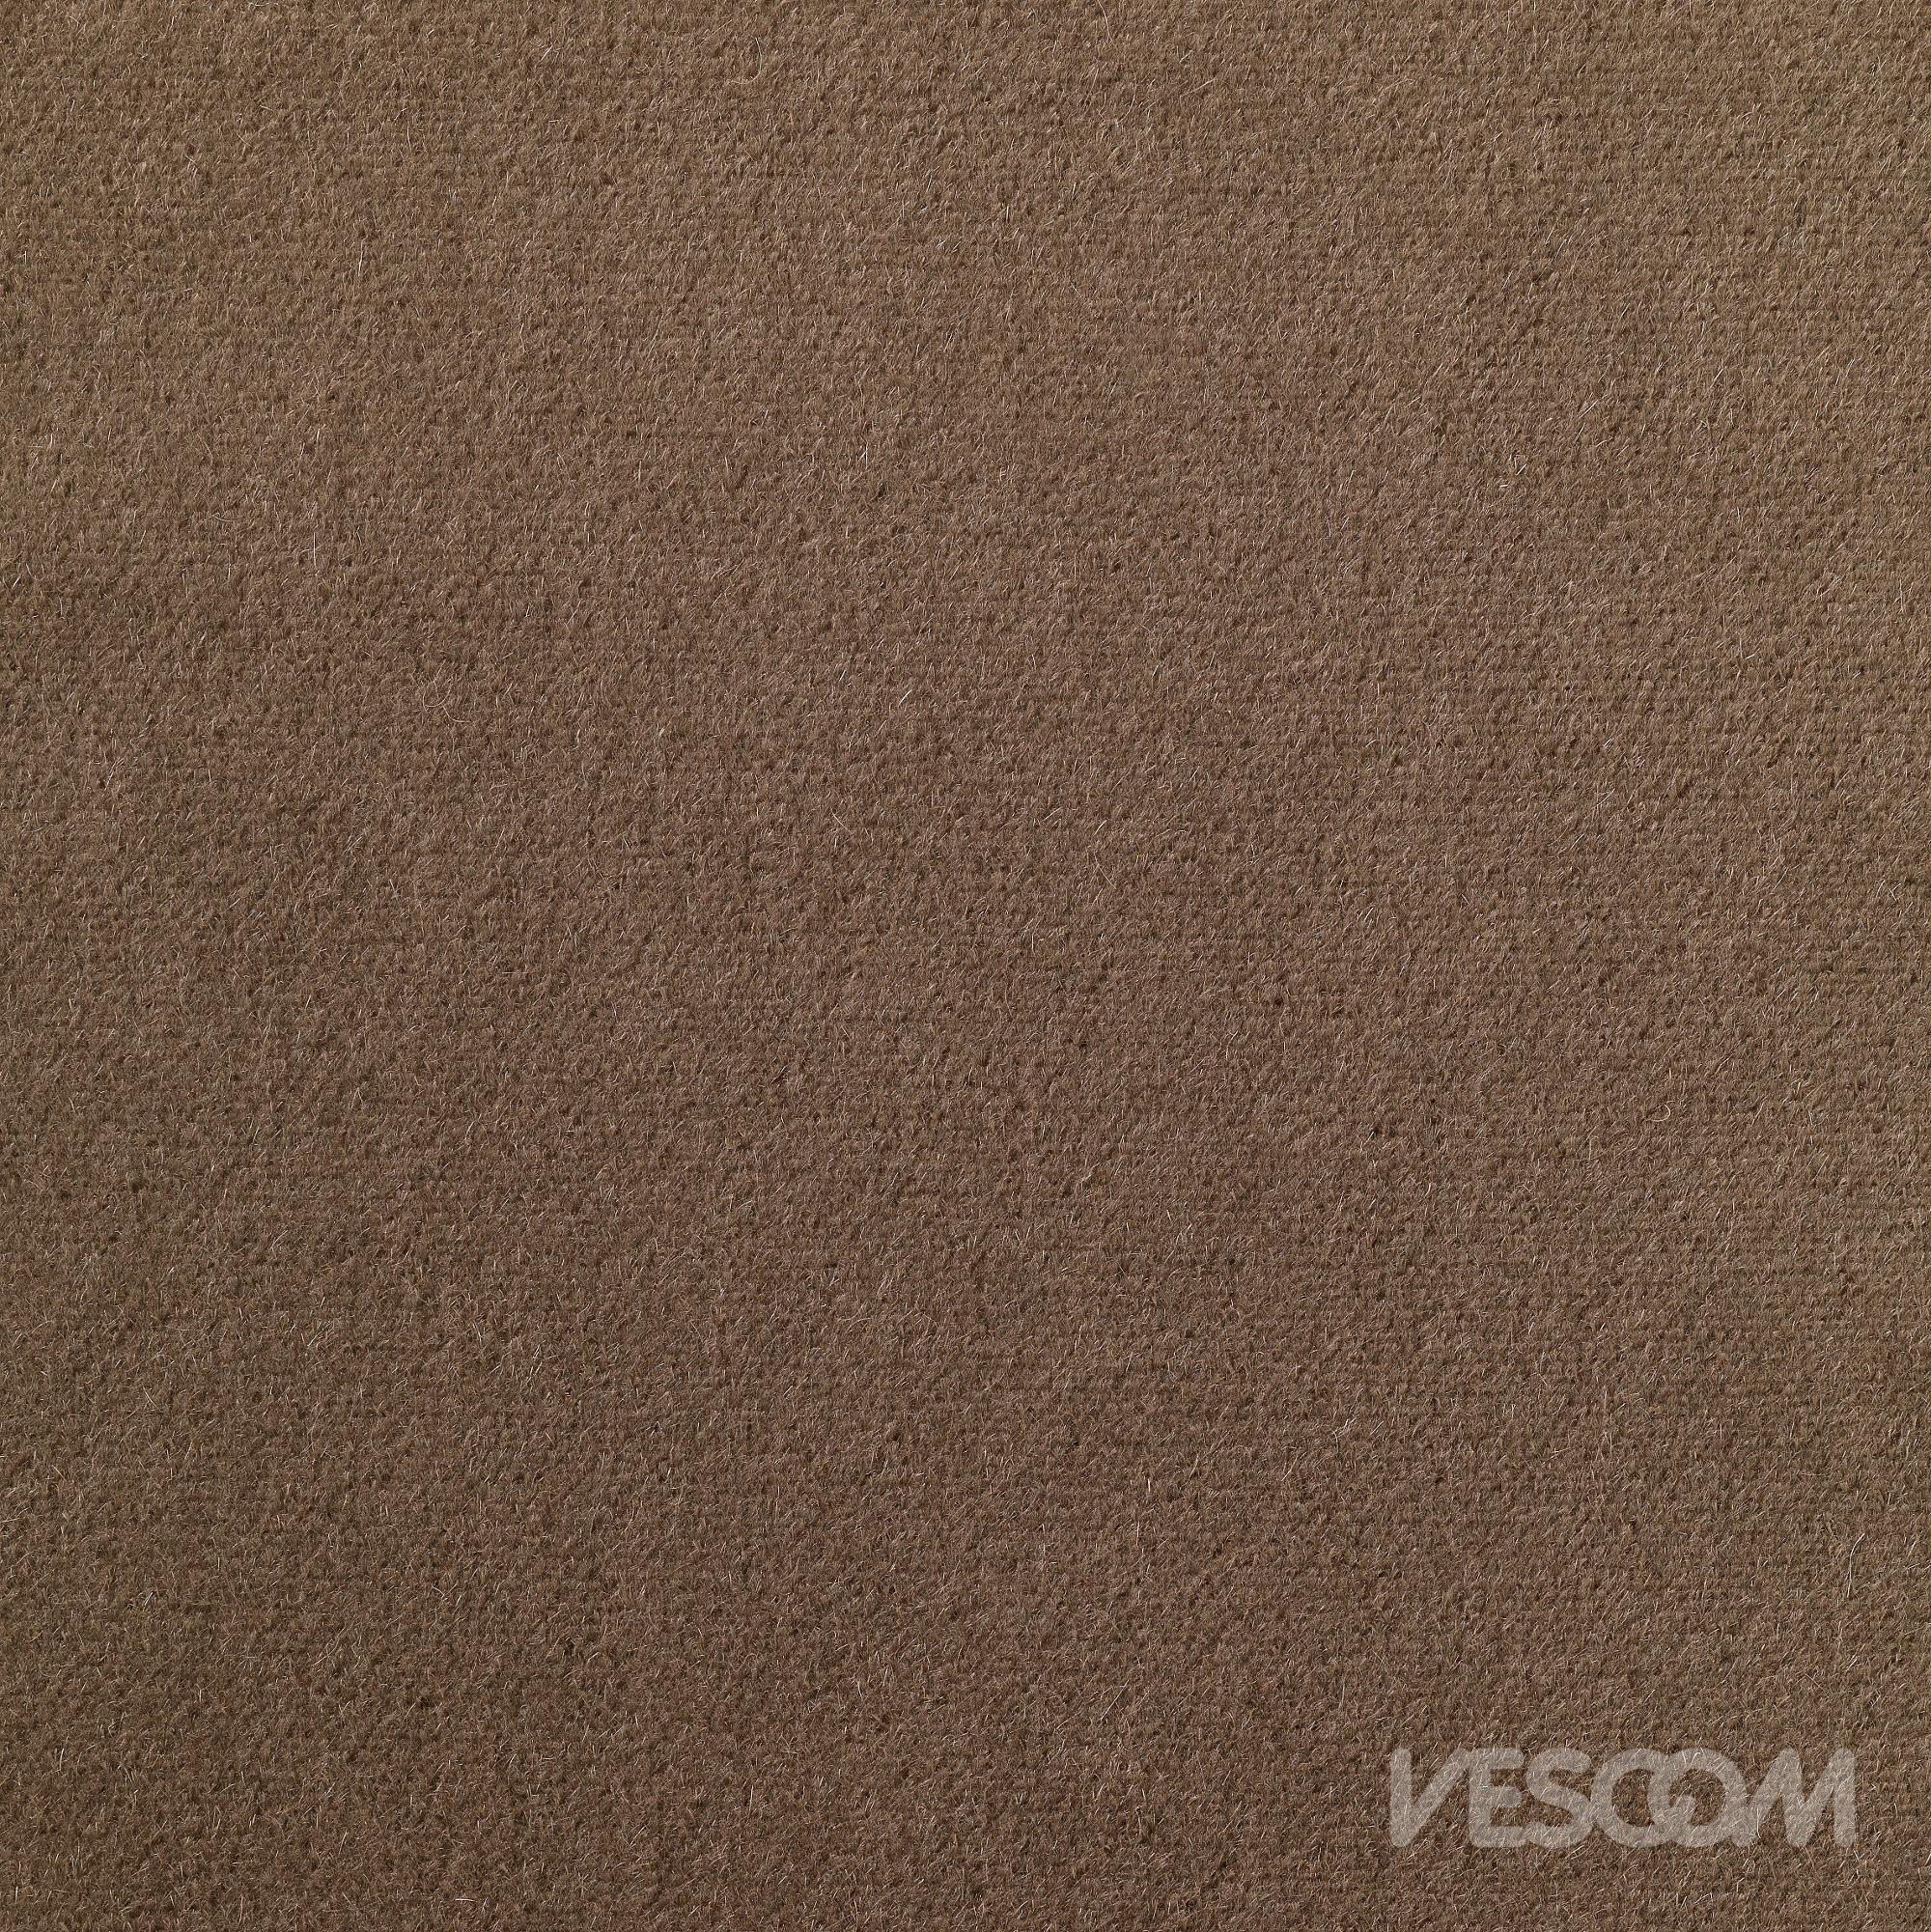 Vescom Ariana Upholstery Fabric 7061.19